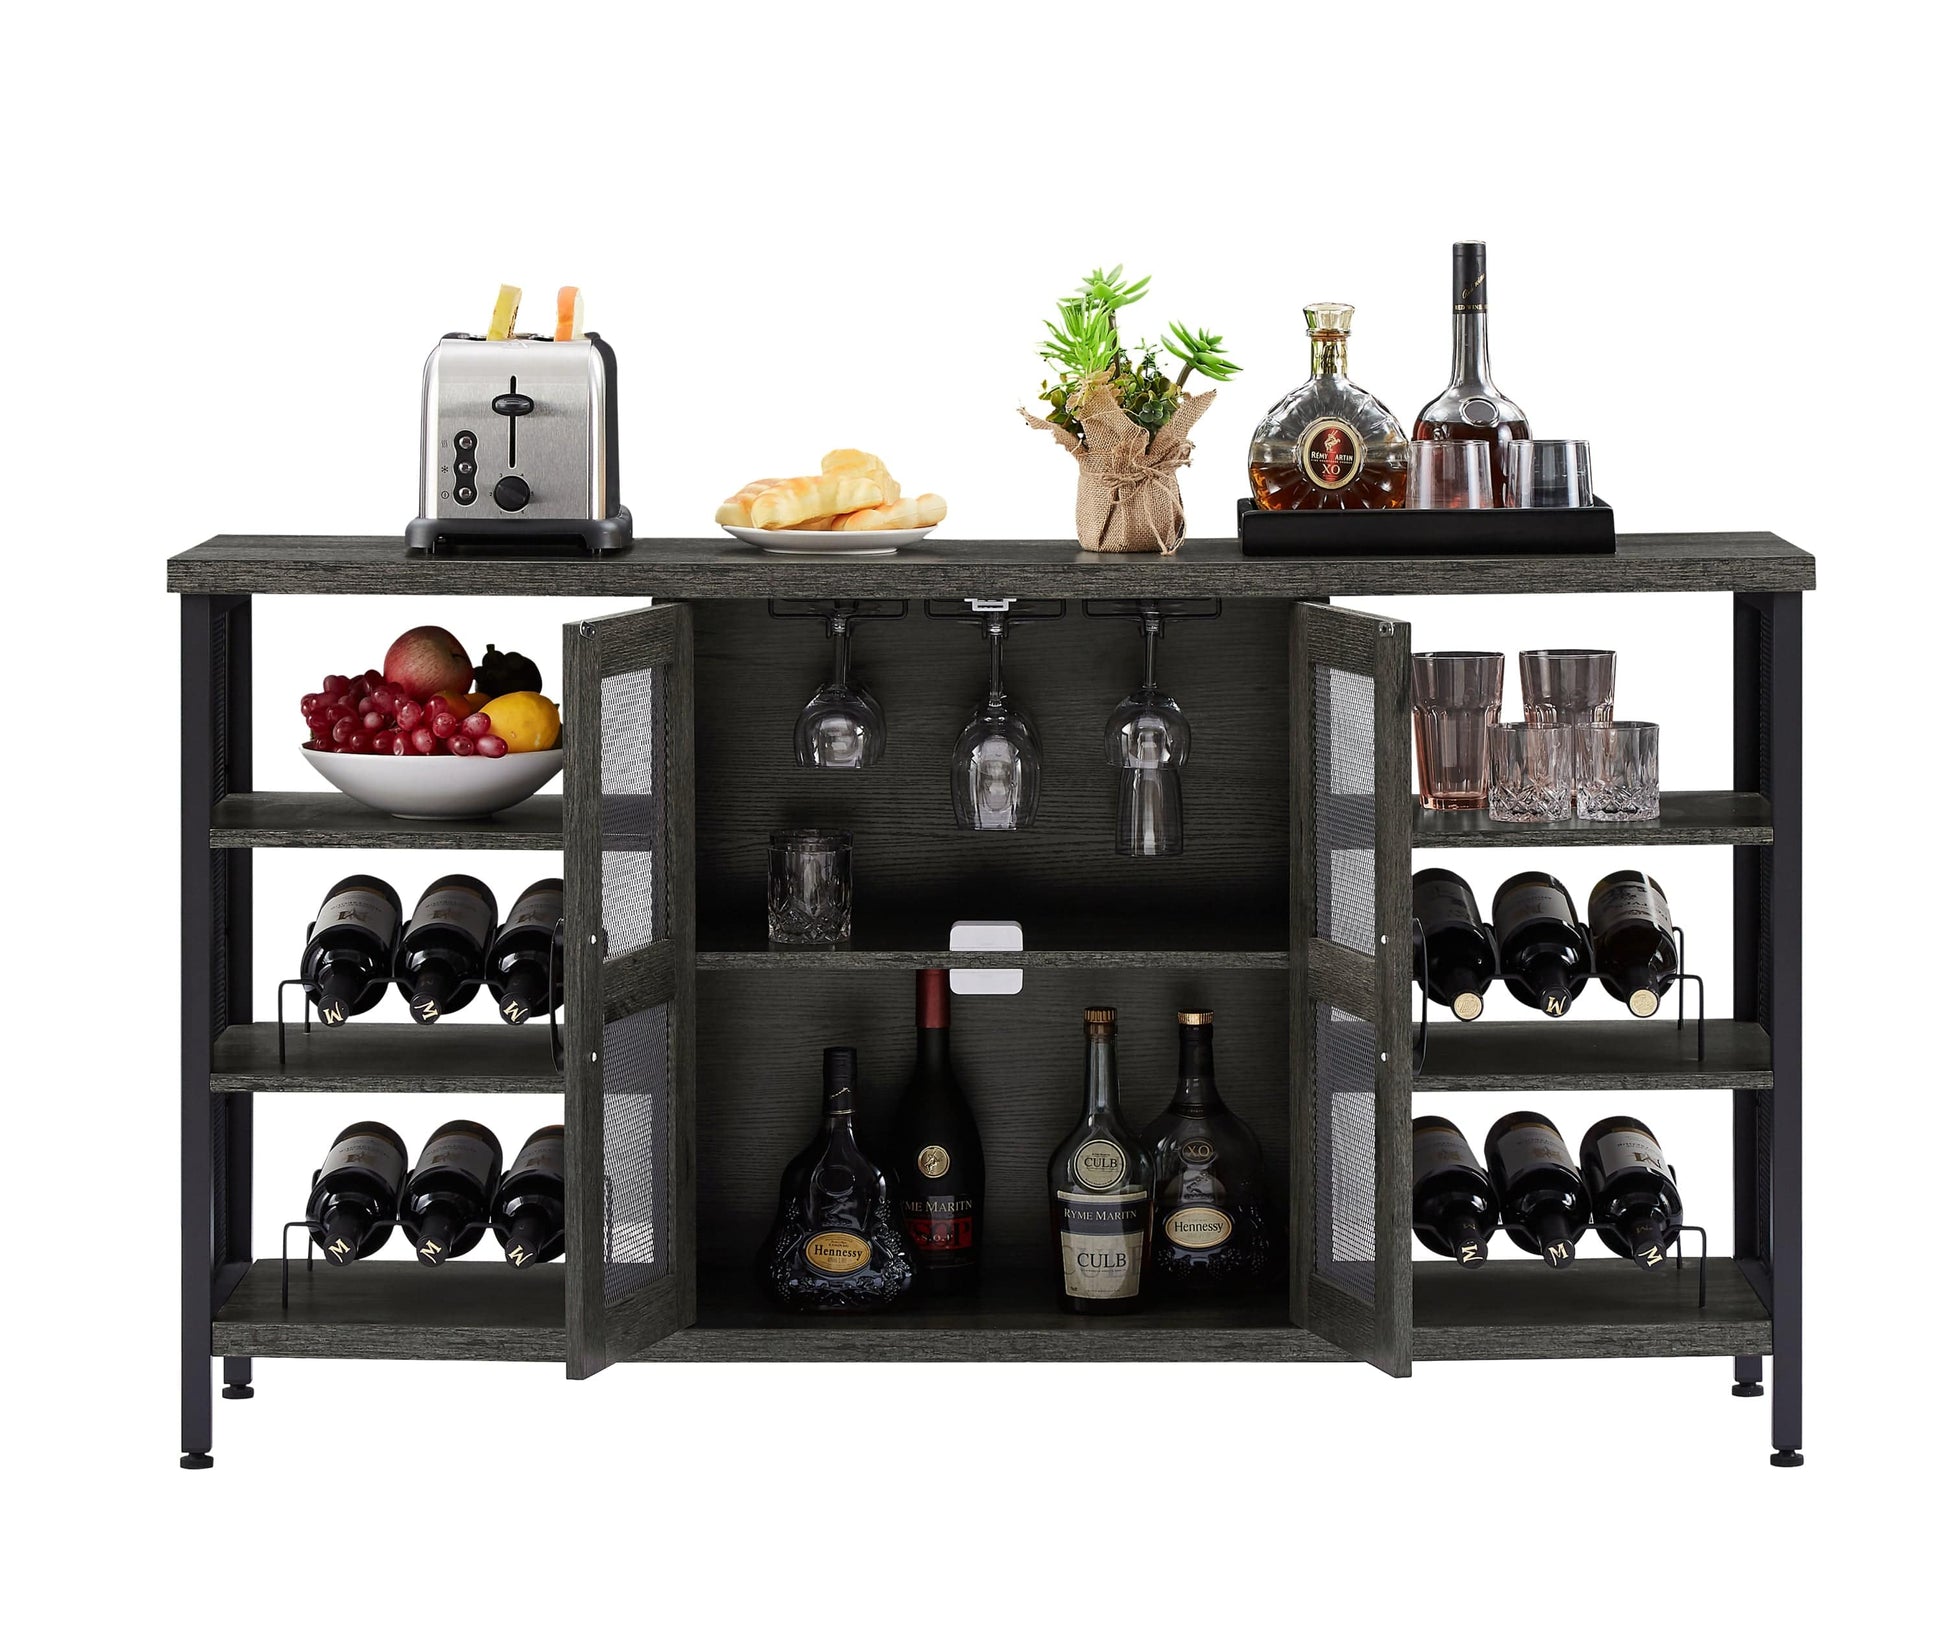 1st Choice Furniture Direct wine bar cabinet 1st Choice Industrial Wine Bar Cabinet and Wine Racks in Dark Grey